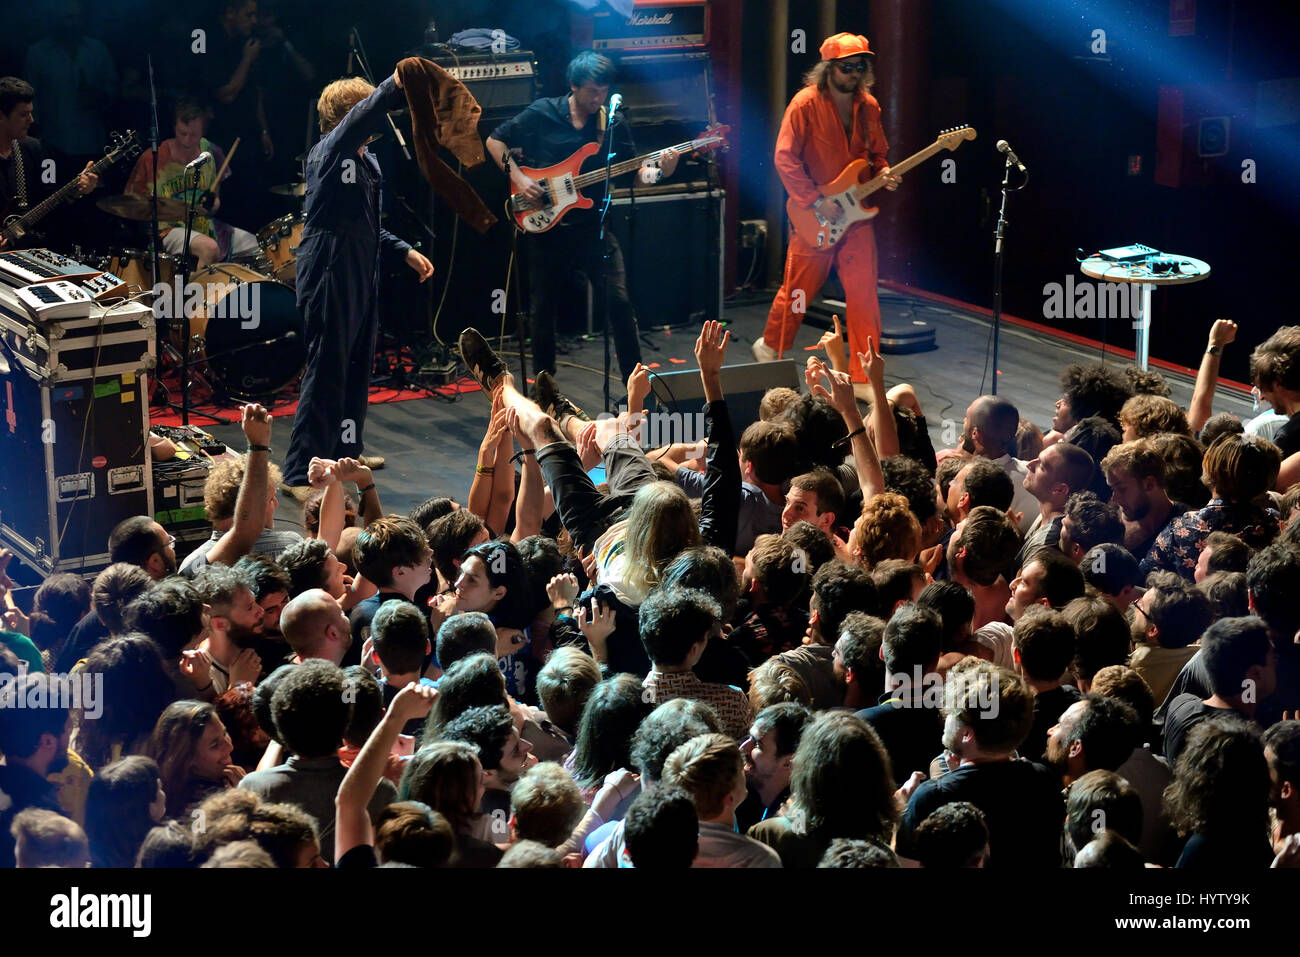 BARCELONA - JUN 5: Crowd in a concert at Primavera Sound 2016 Festival on June 5, 2016 in Barcelona, Spain. Stock Photo